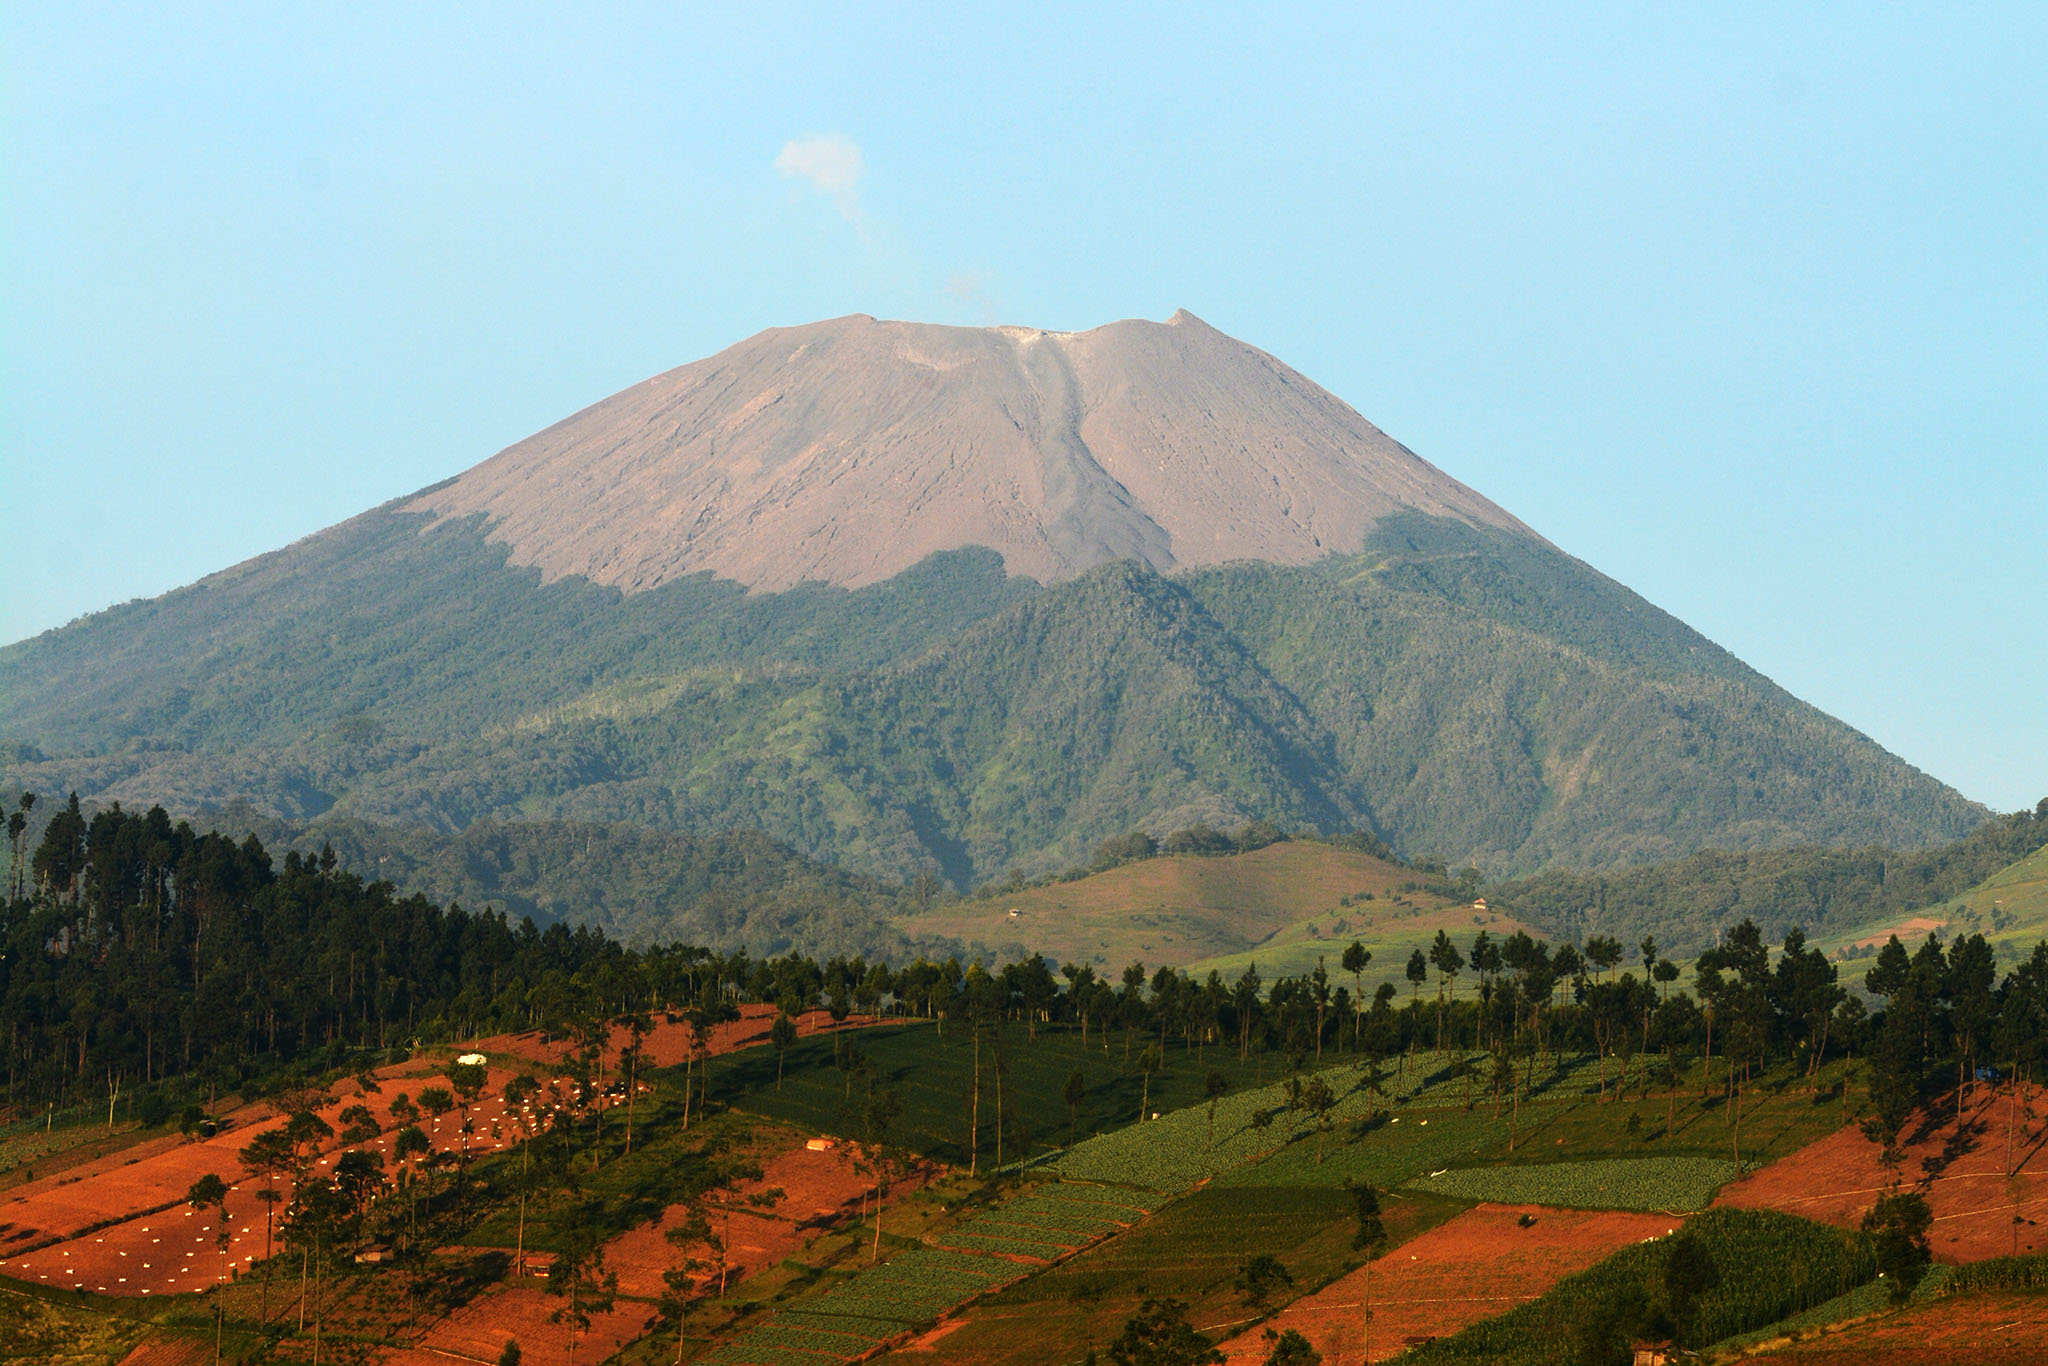 Jangan Sembarangan! Catat 5 Hal Penting Sebelum Mengunjungi Gunung Slamet Jawa Tengah